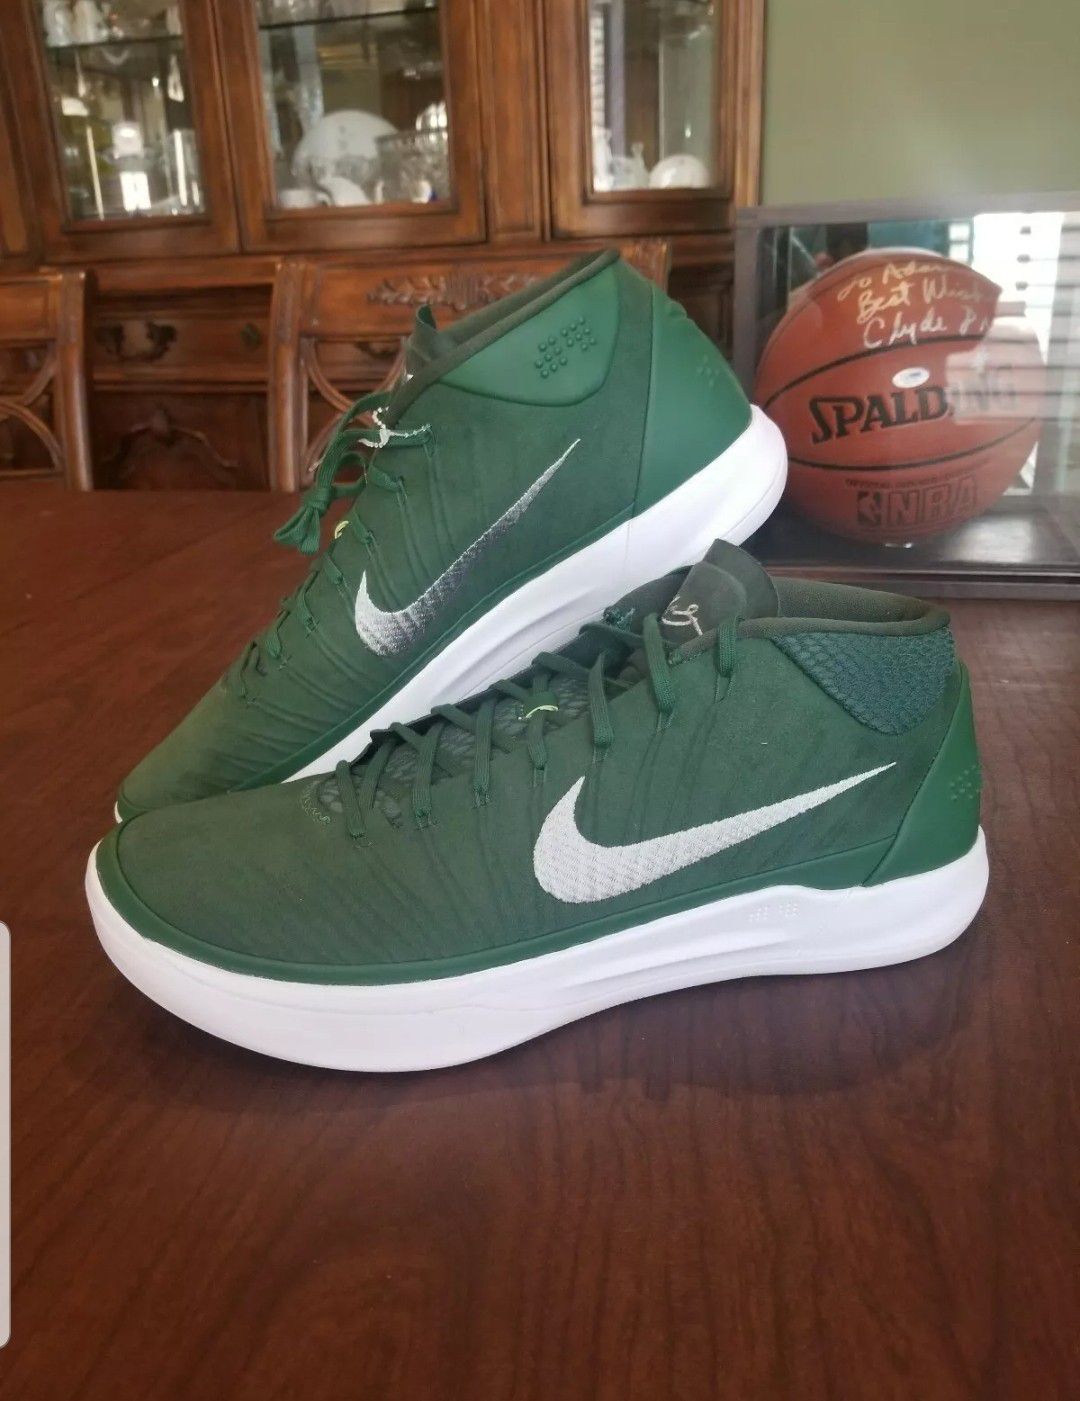 NEW Nike Kobe Bryant AD TB Clover Green Basketball Shoes 942521-302 Men's Size 16.5